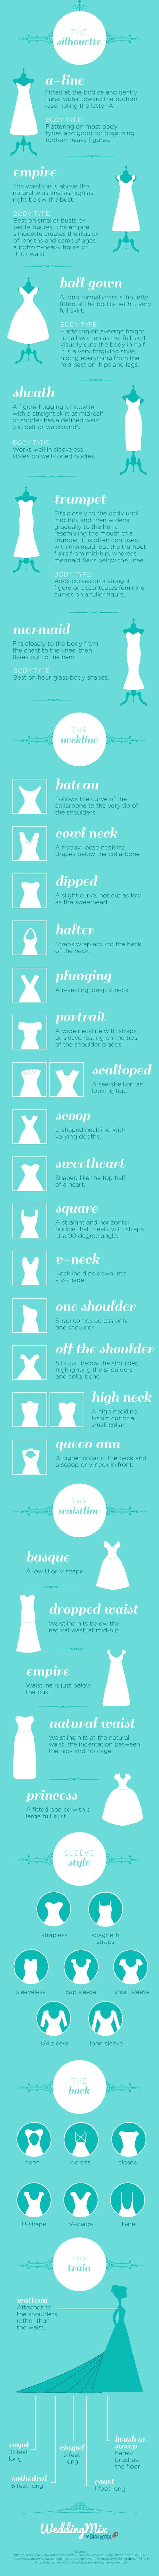 Wedding dress info-graphic on styles, necklines, a...